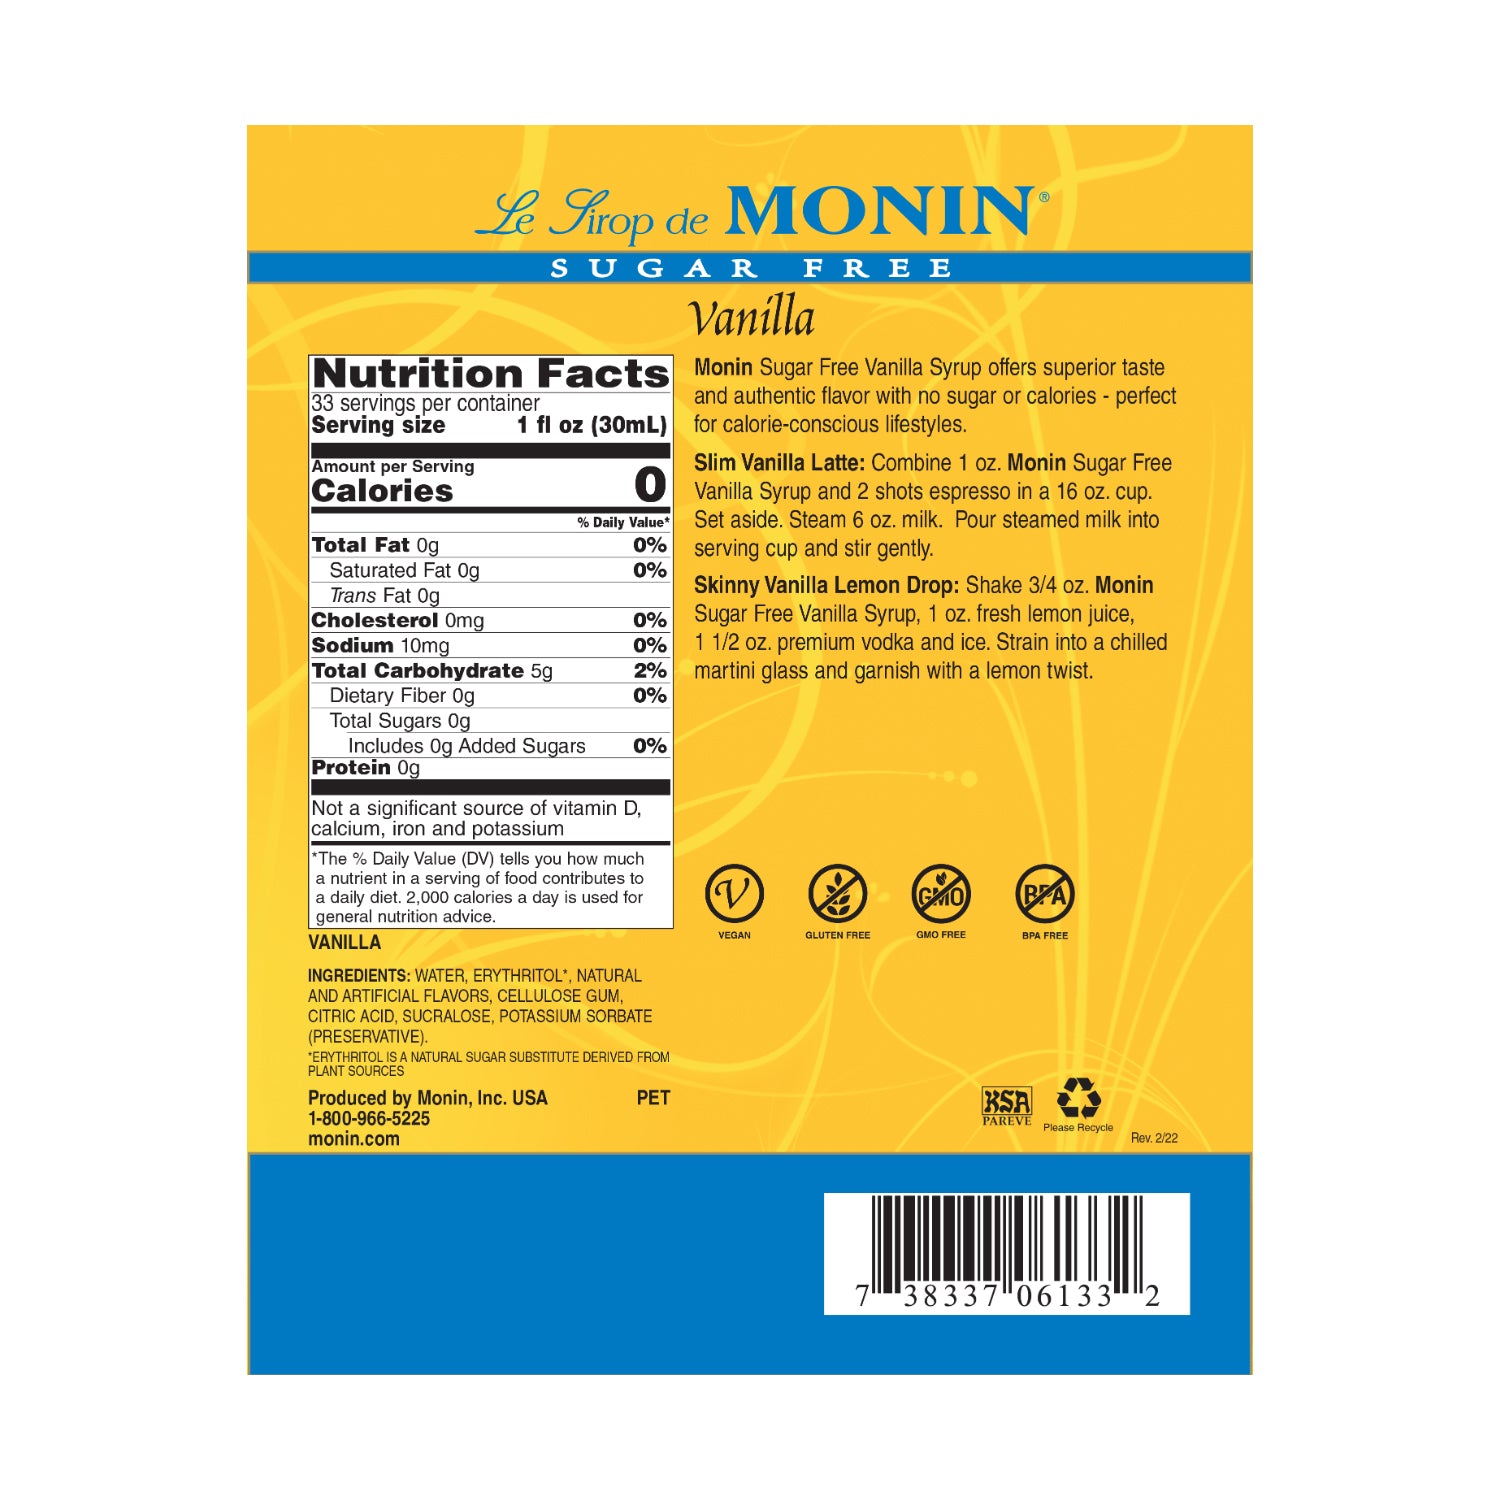 Monin Sugar Free Vanilla Syrup nutrition facts and recipe label